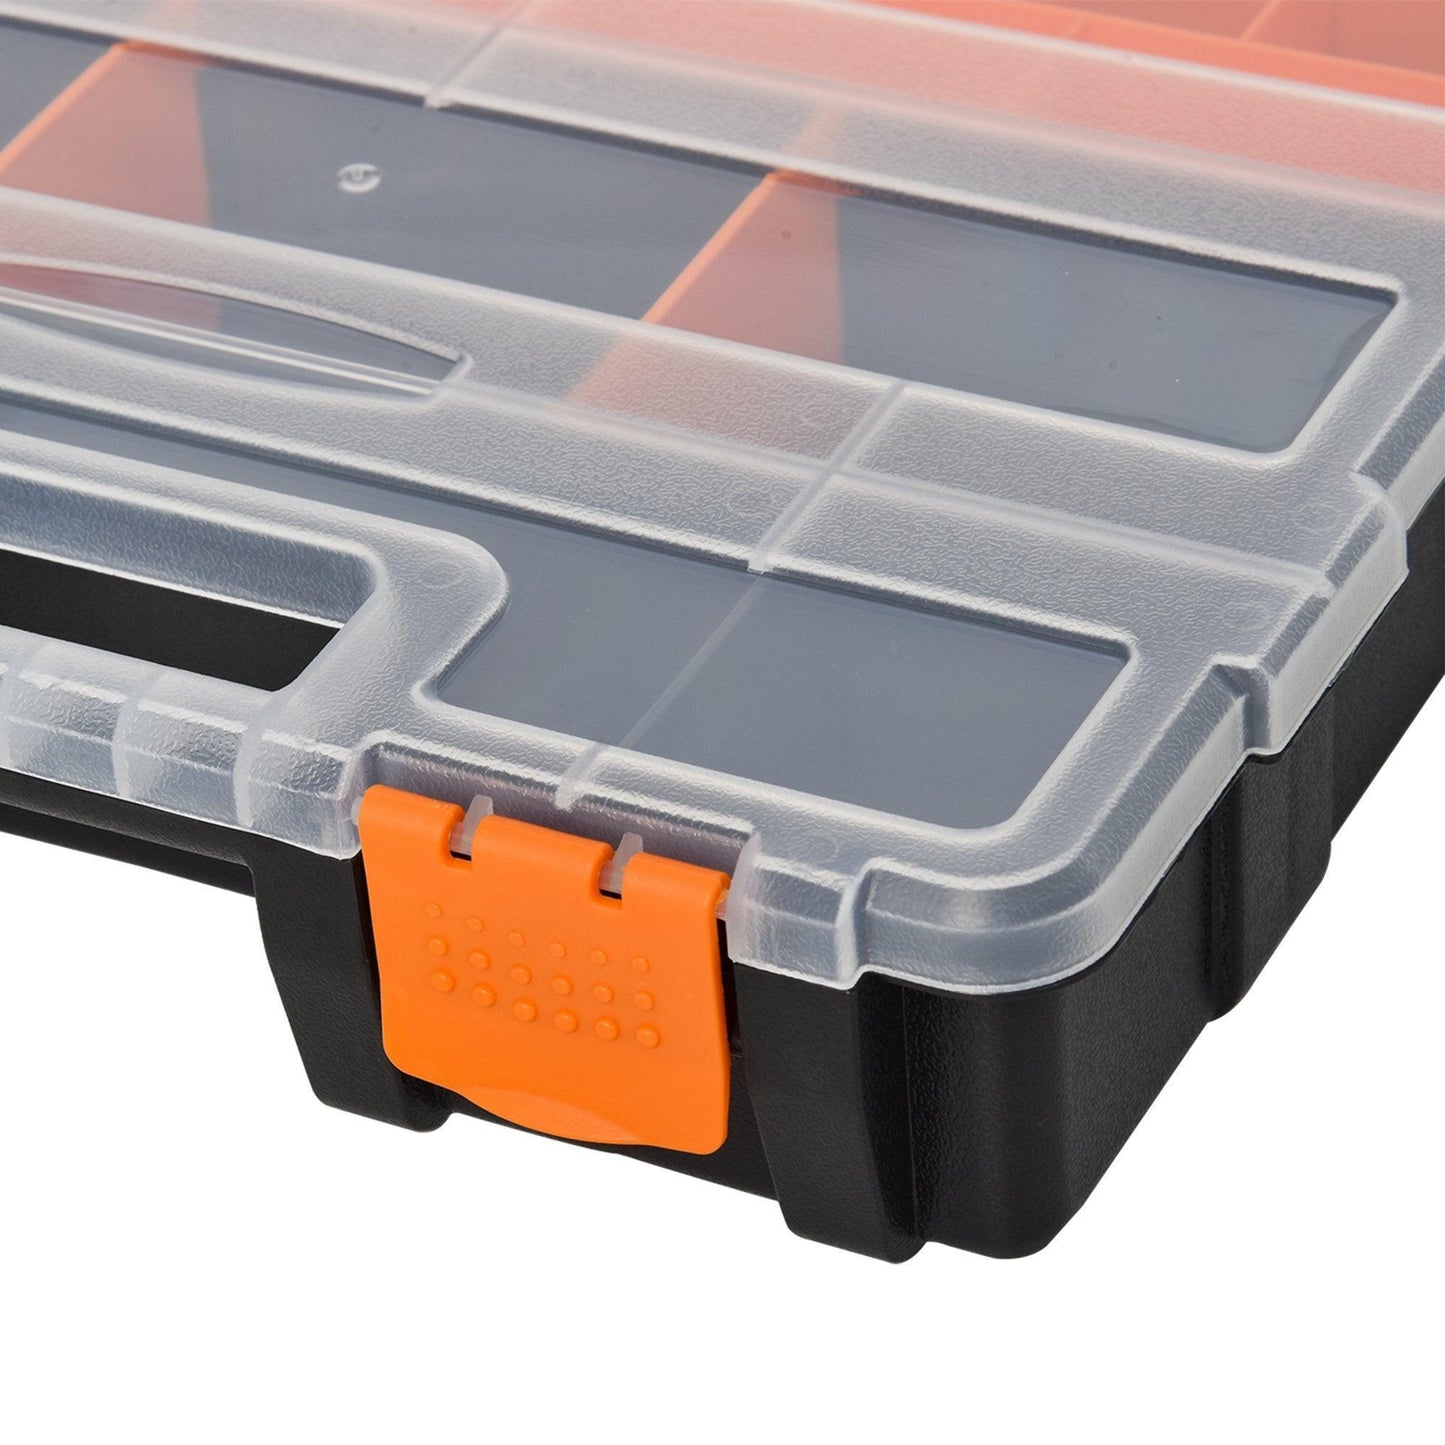 DURHAND 4-Pack Tool & Hardware Storage Box Set: Black/Orange - ALL4U RETAILER LTD